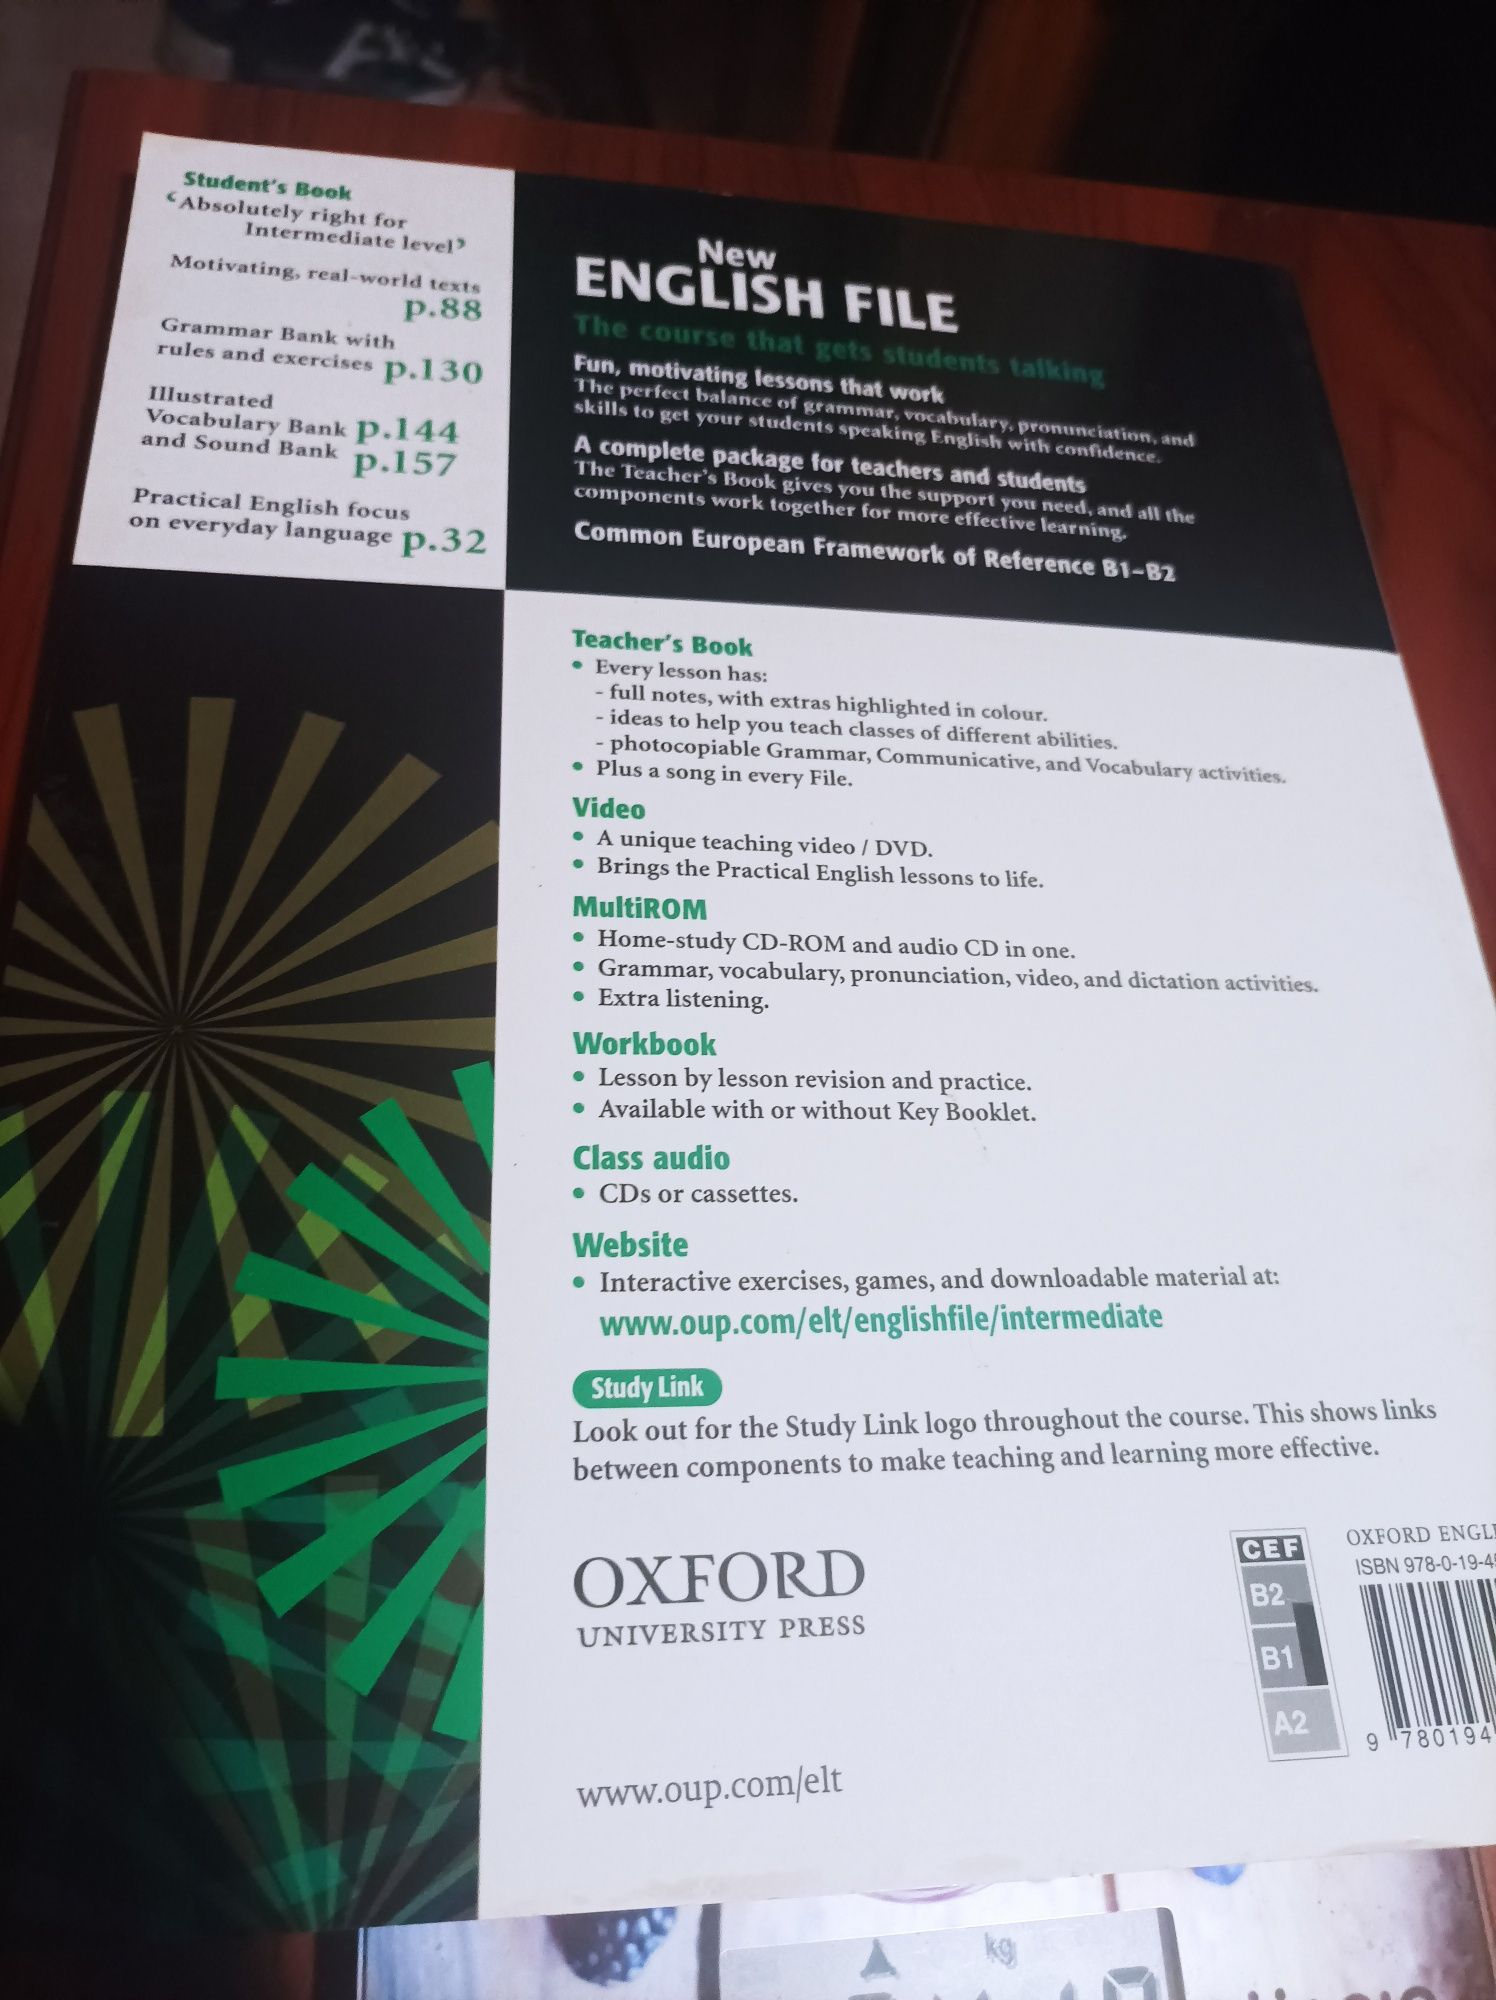 New English File Intermediate Student's book 2011